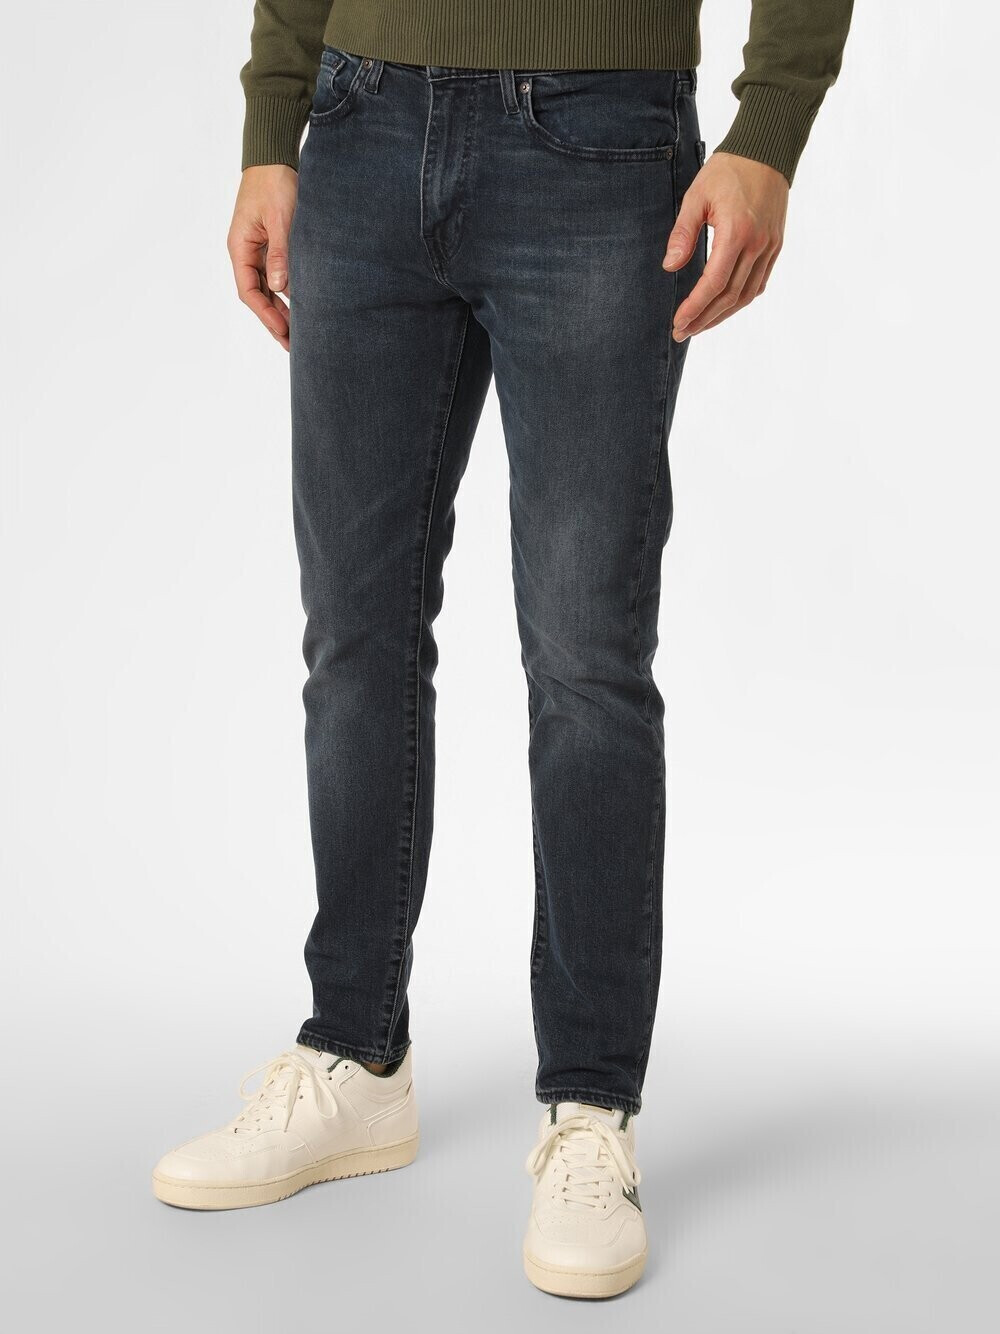 Buy Levi's 512 Slim Taper Fit Jeans dark black stonewash from £49.20  (Today) – Best Deals on